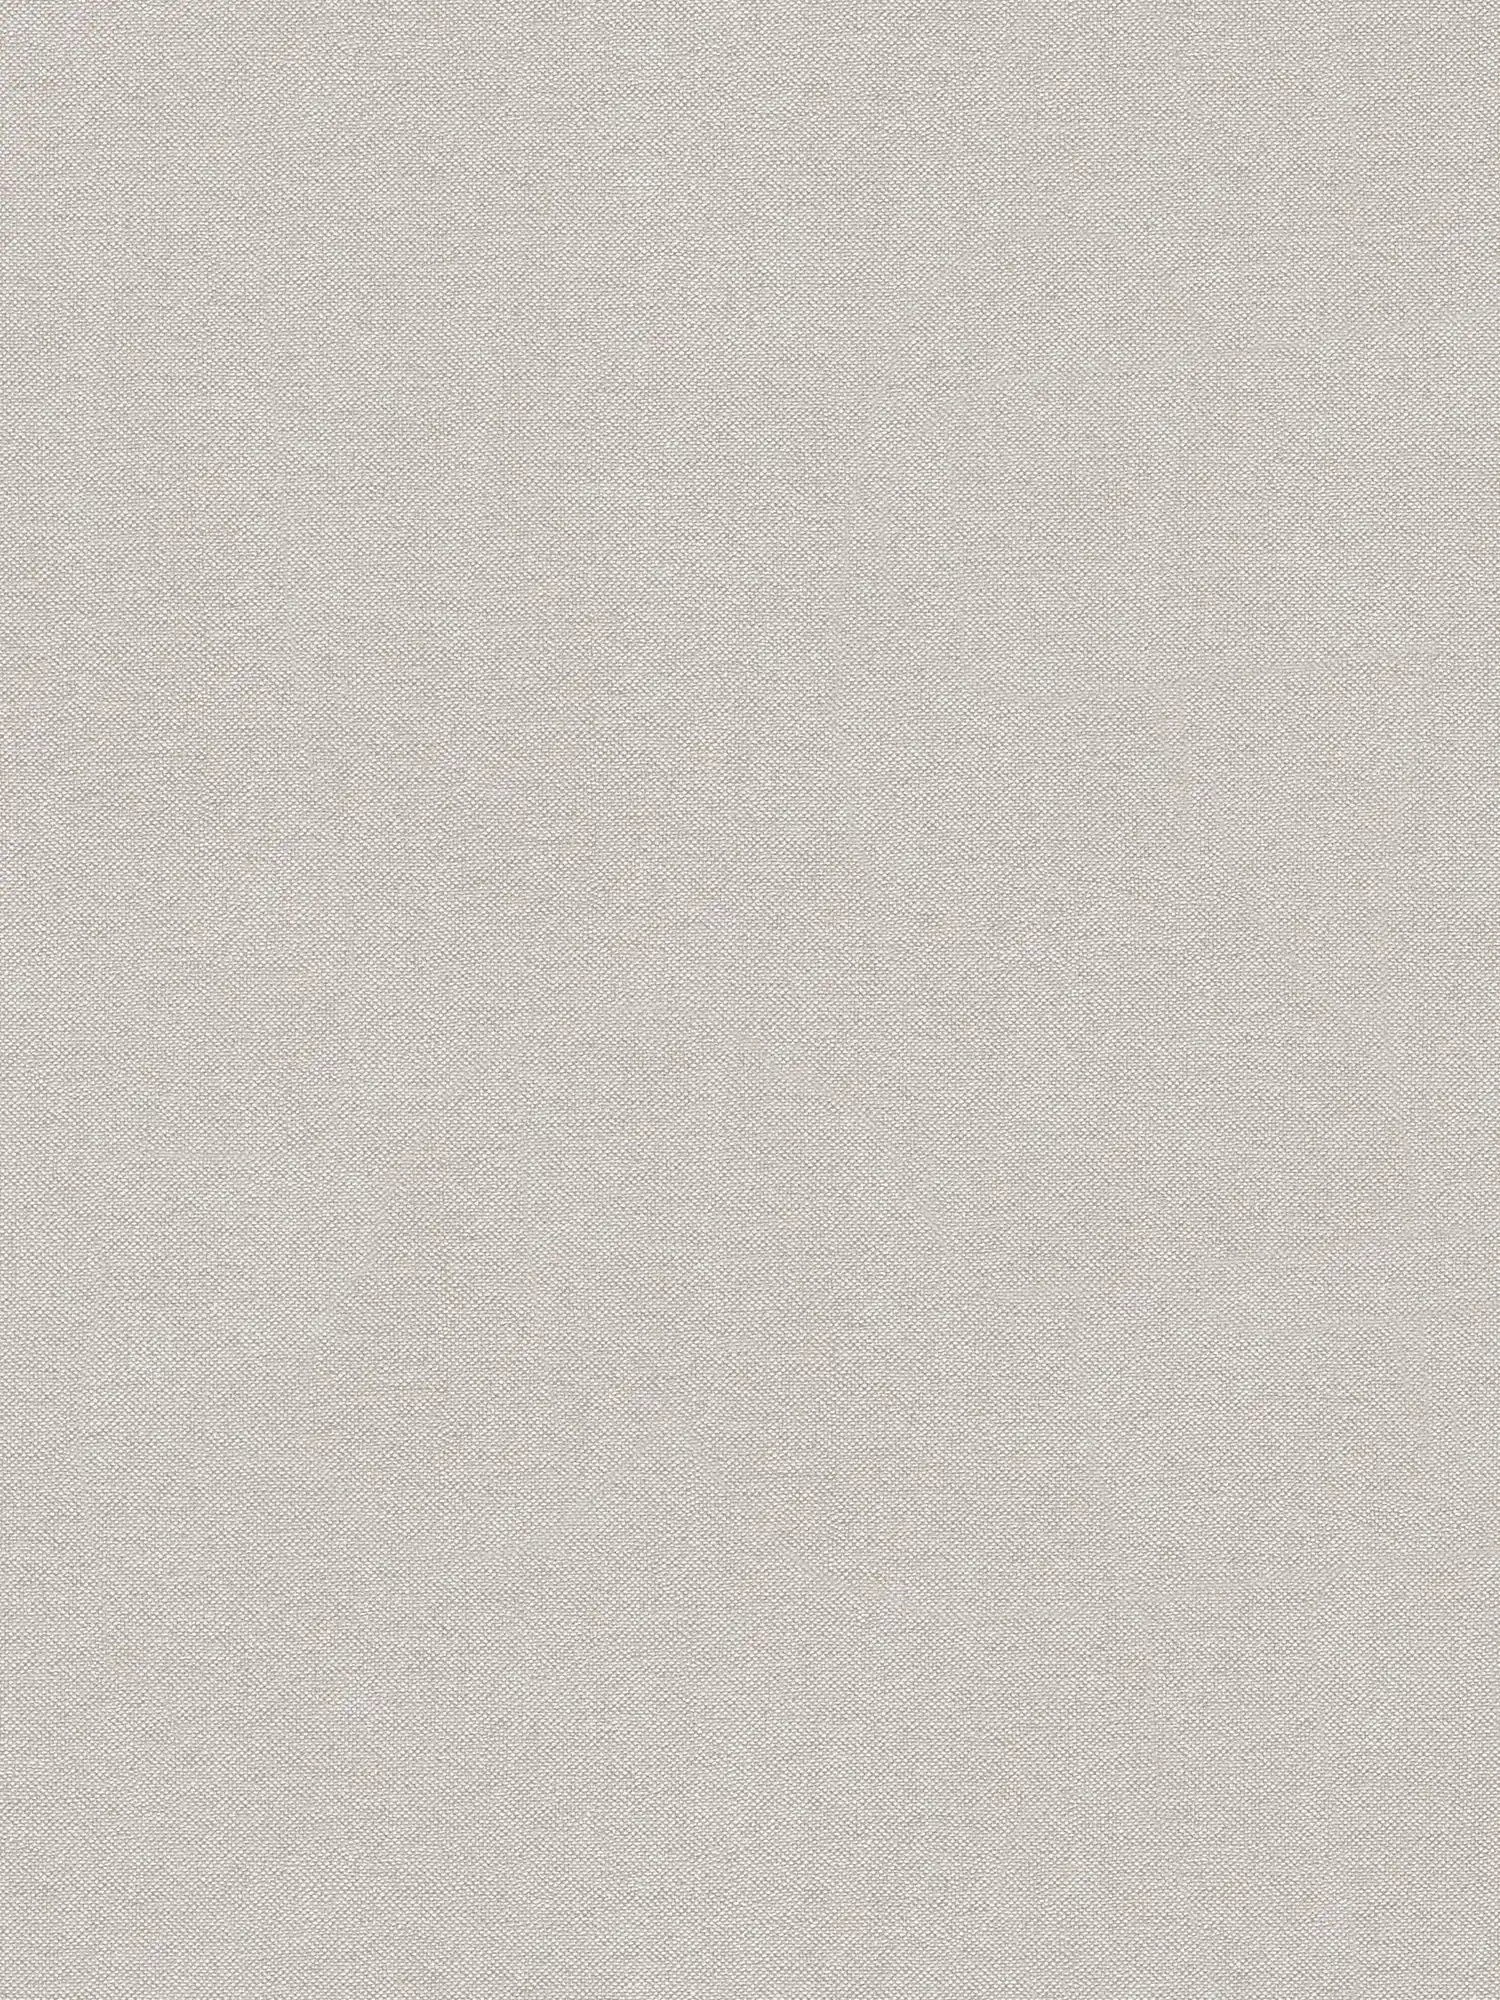 Plain wallpaper with textile structure in elegant design - beige, brown
